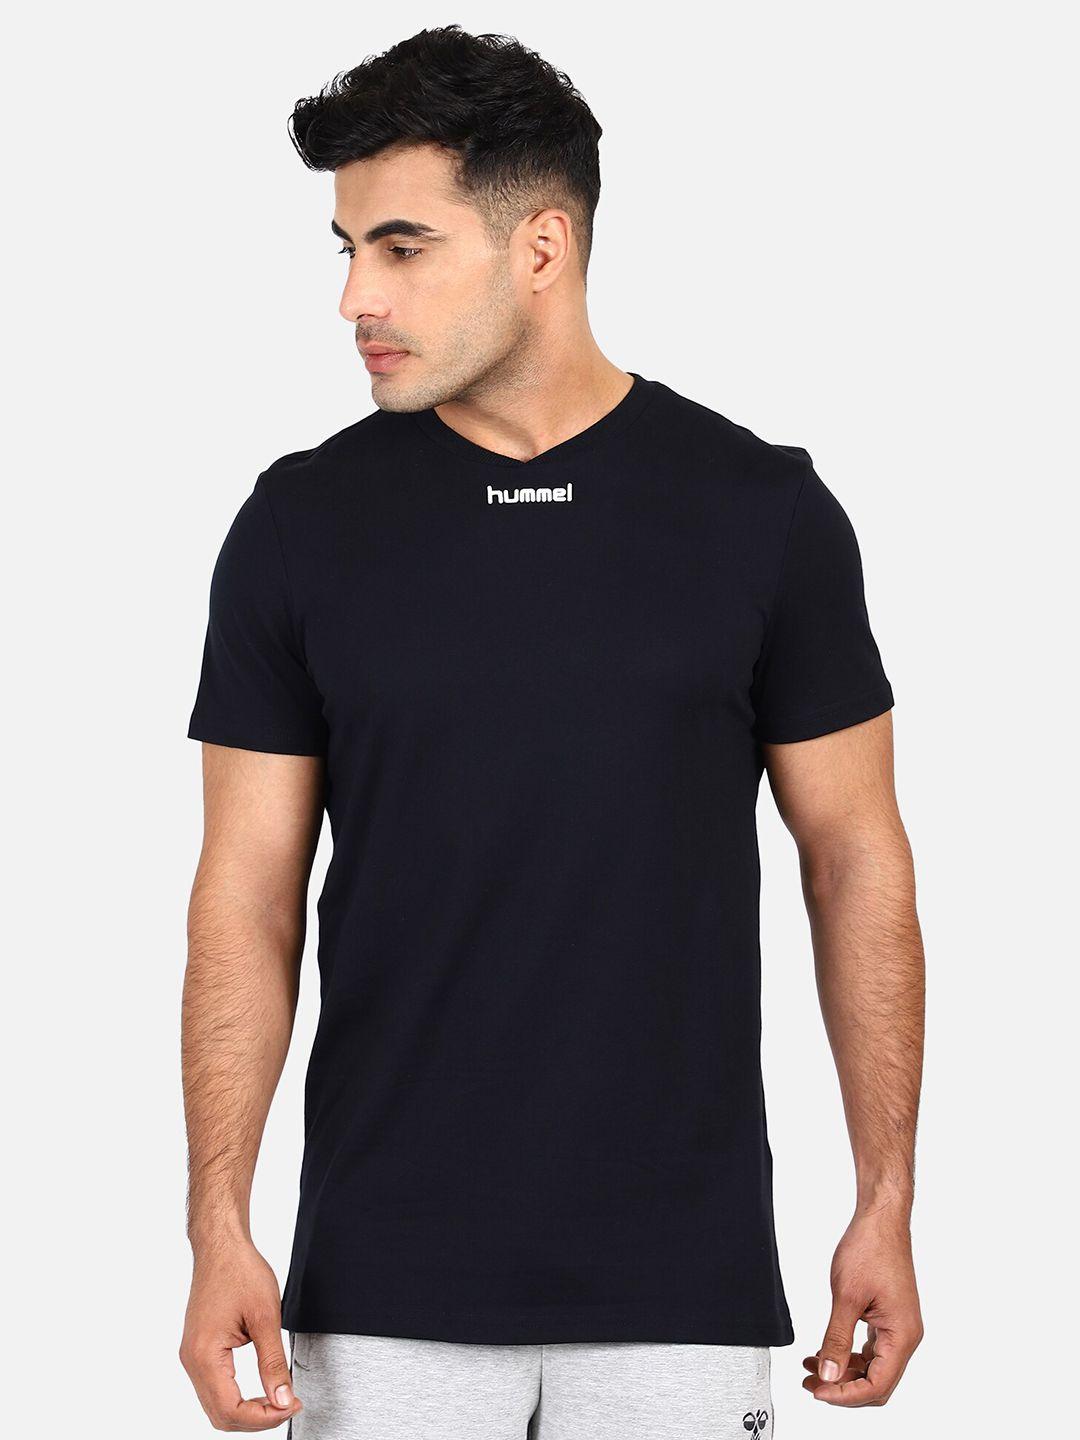 hummel-men-black-solid-cotton-t-shirt